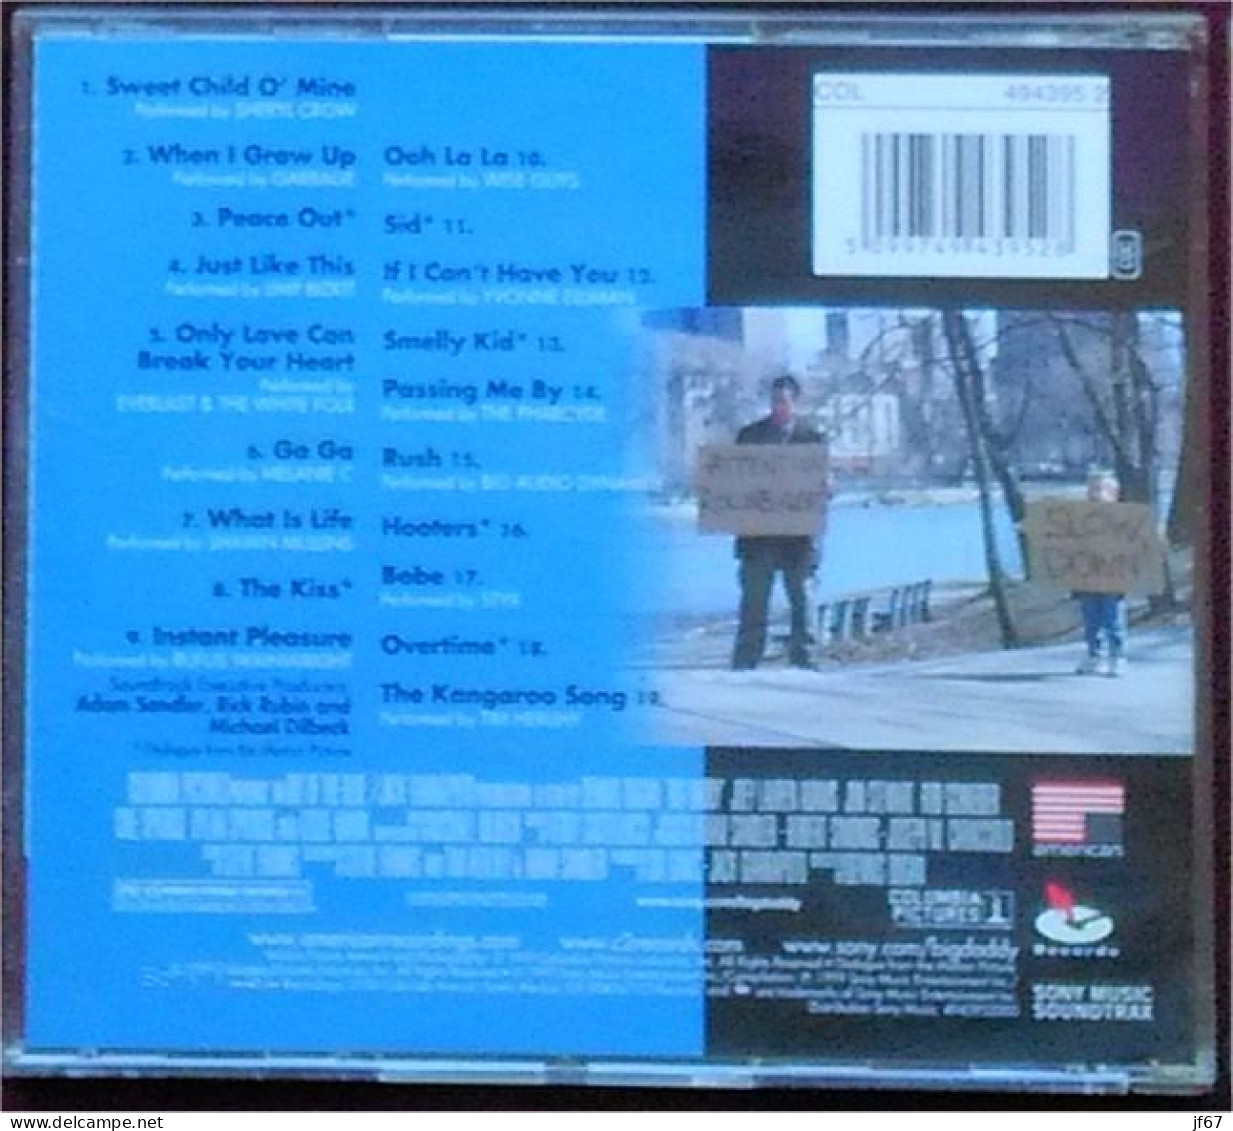 Big Daddy (CD BO Film) - Soundtracks, Film Music